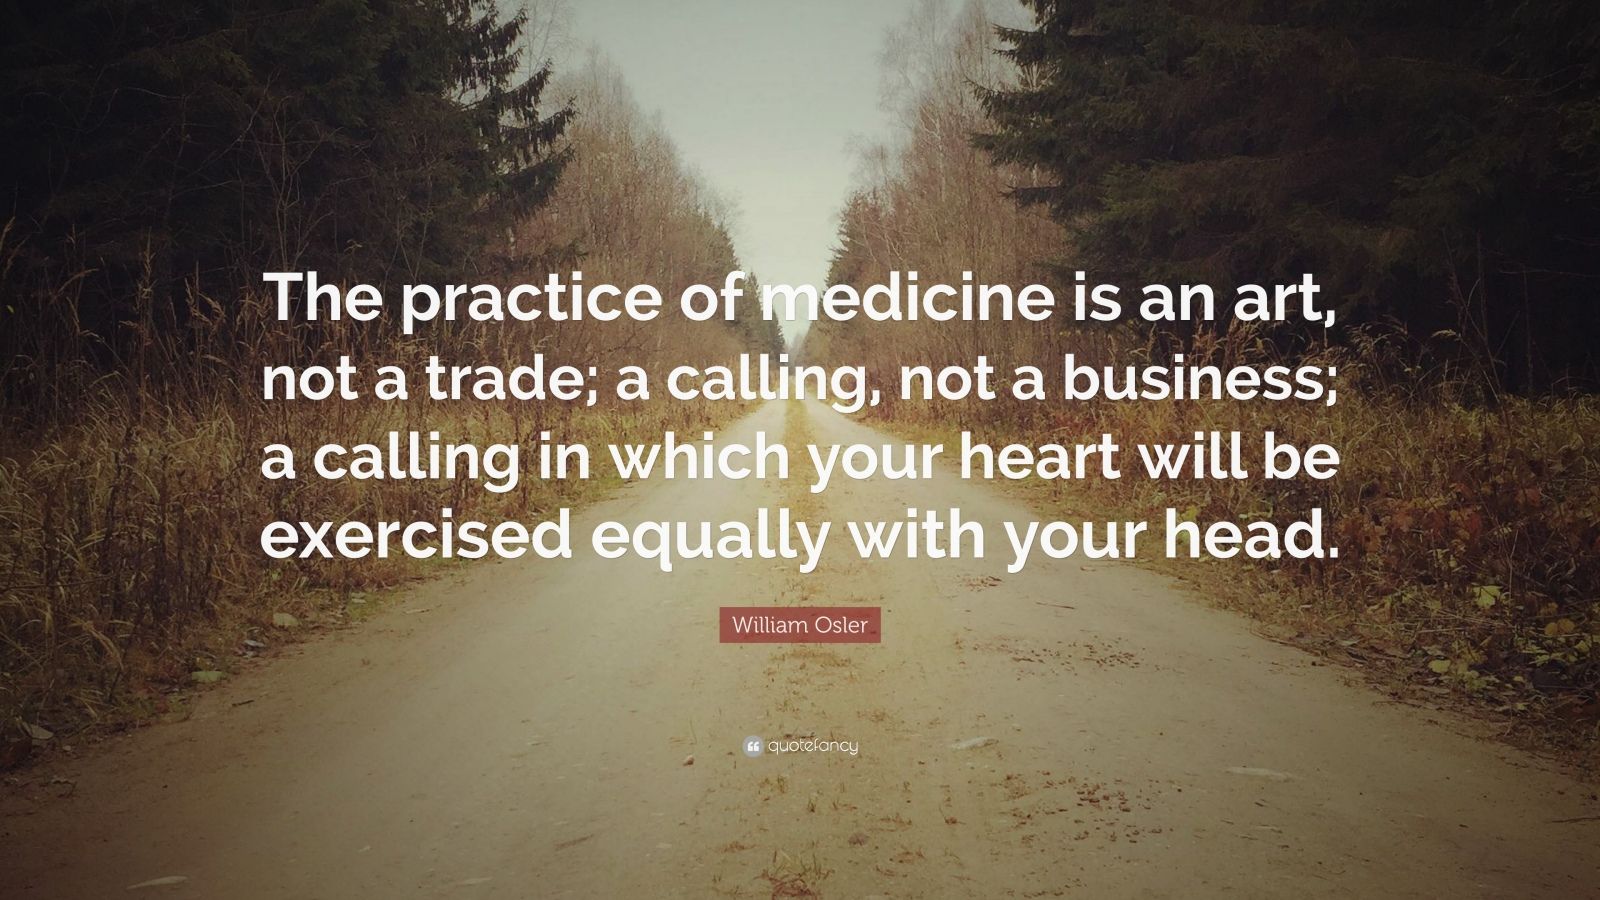 William Osler Quote “The practice of medicine is an art